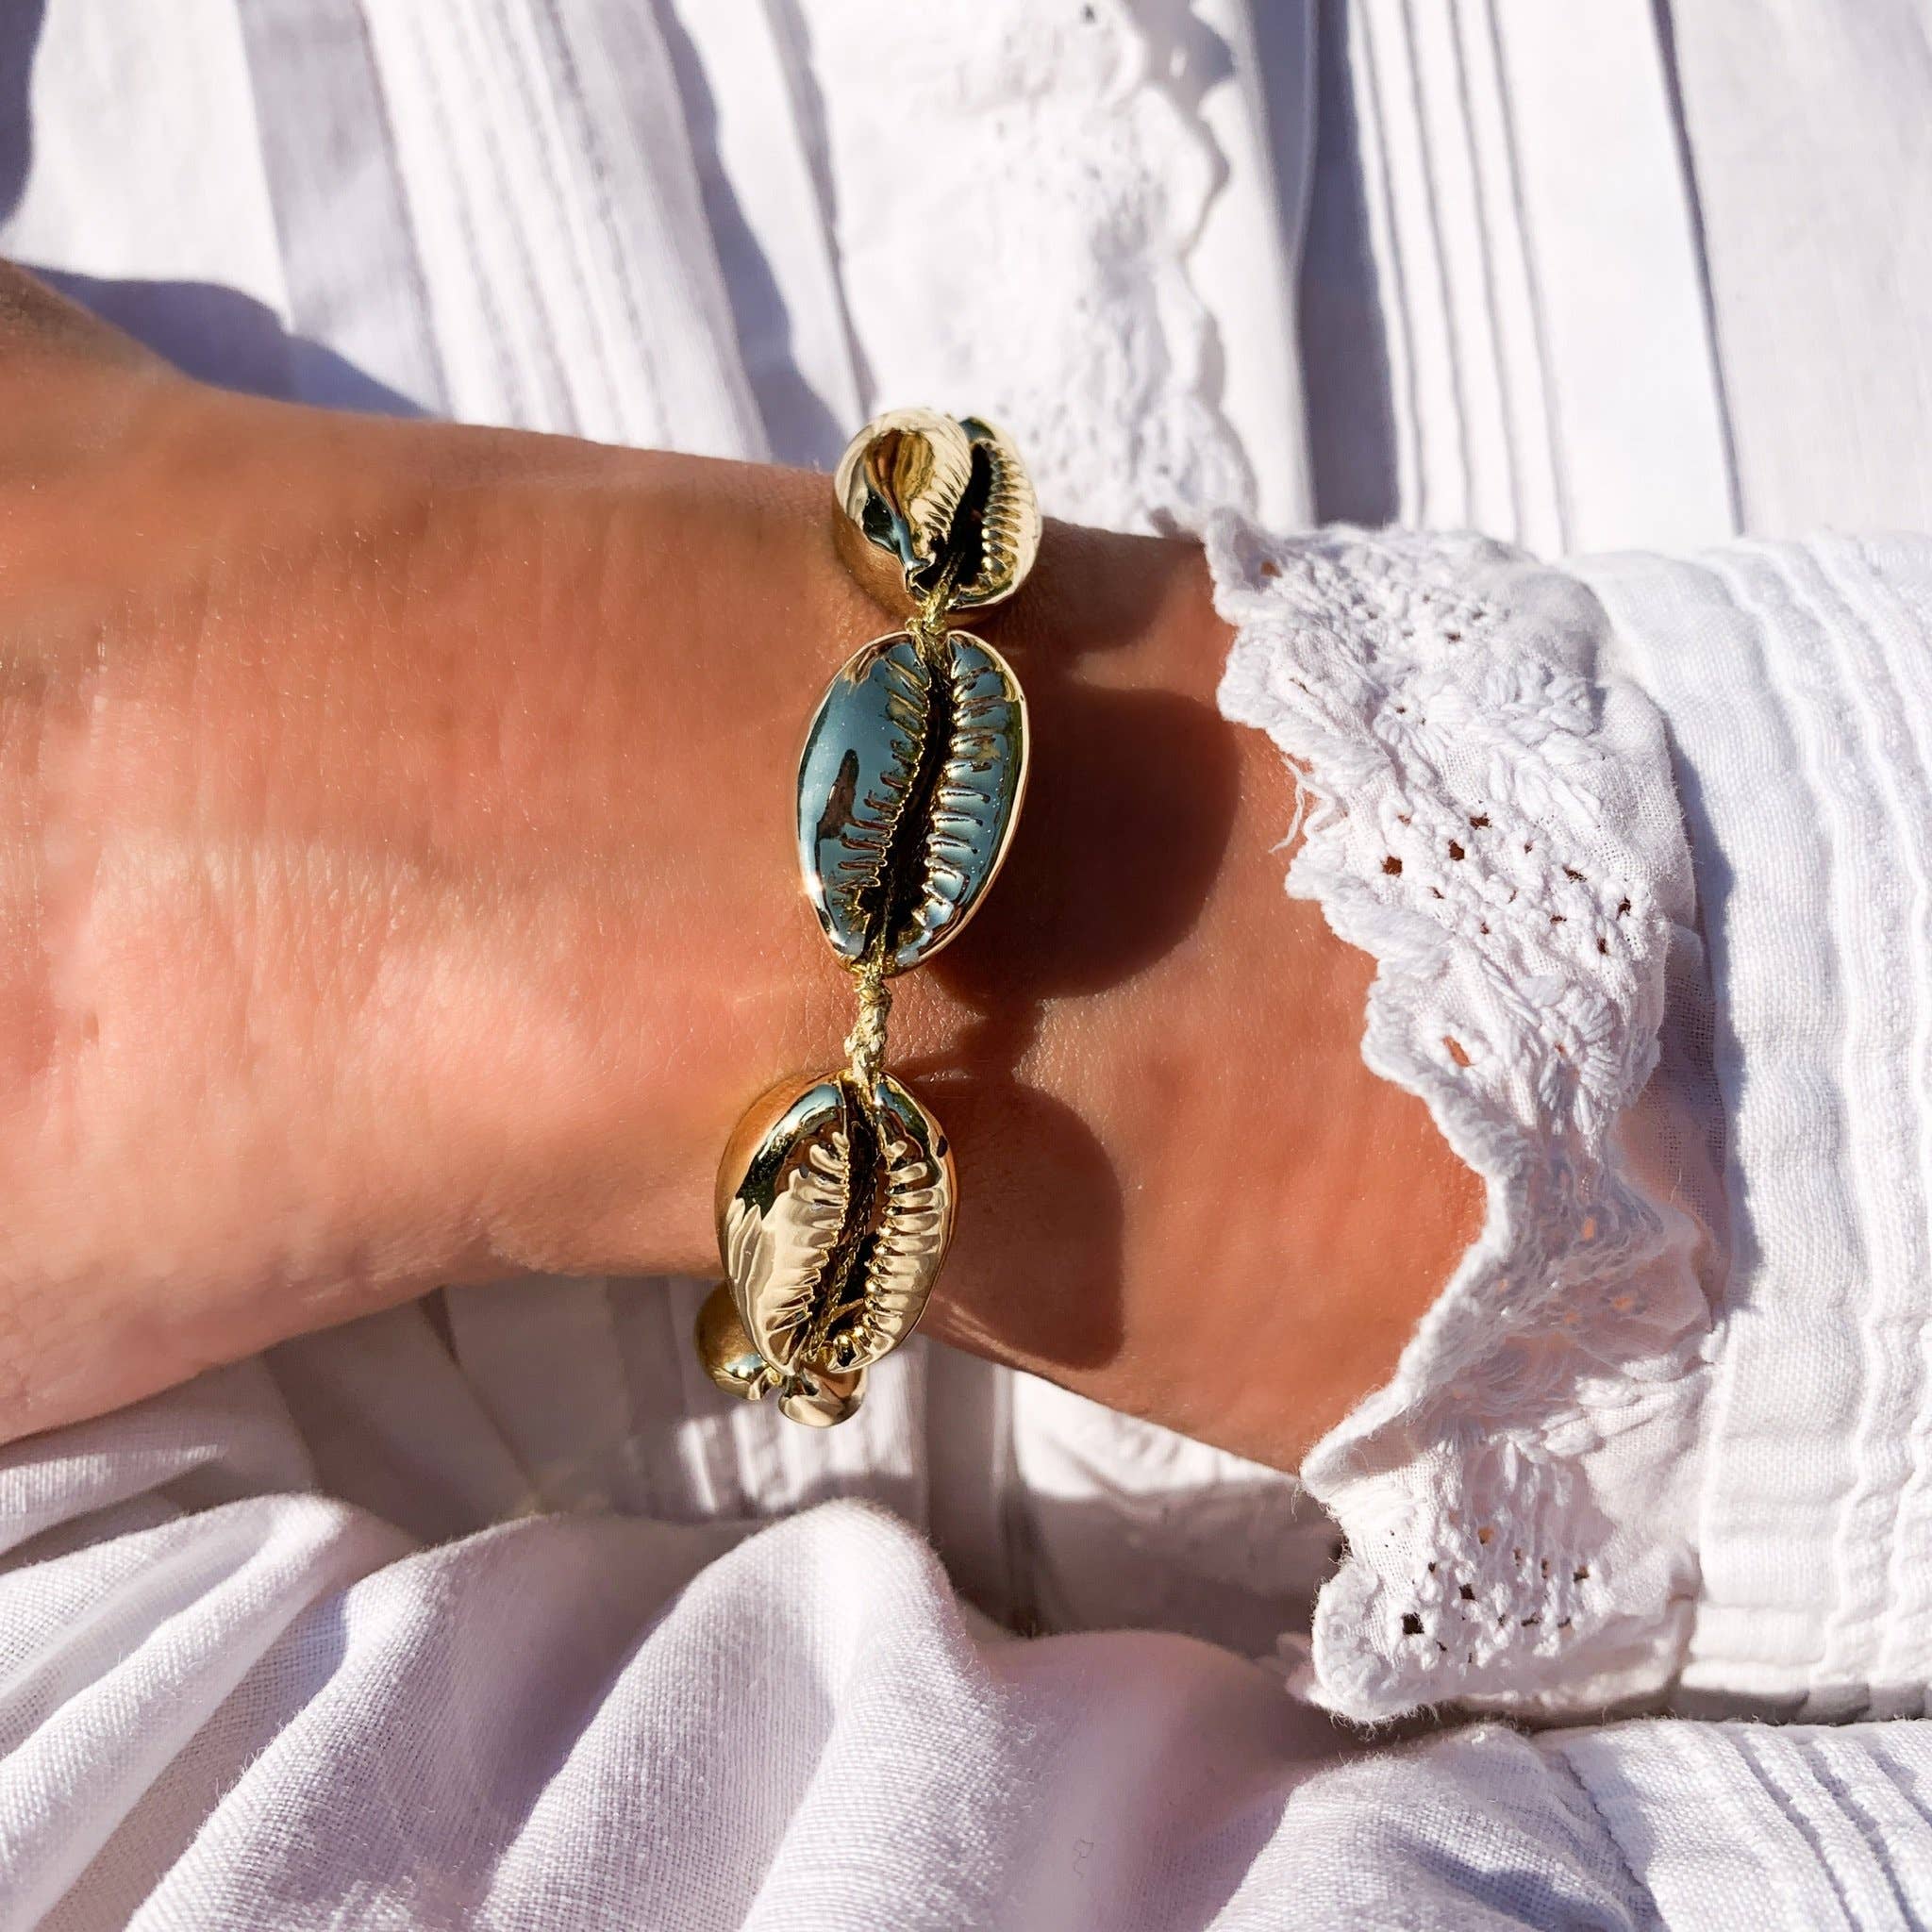 Maui gold - Shell bracelet - Trium Jewelry